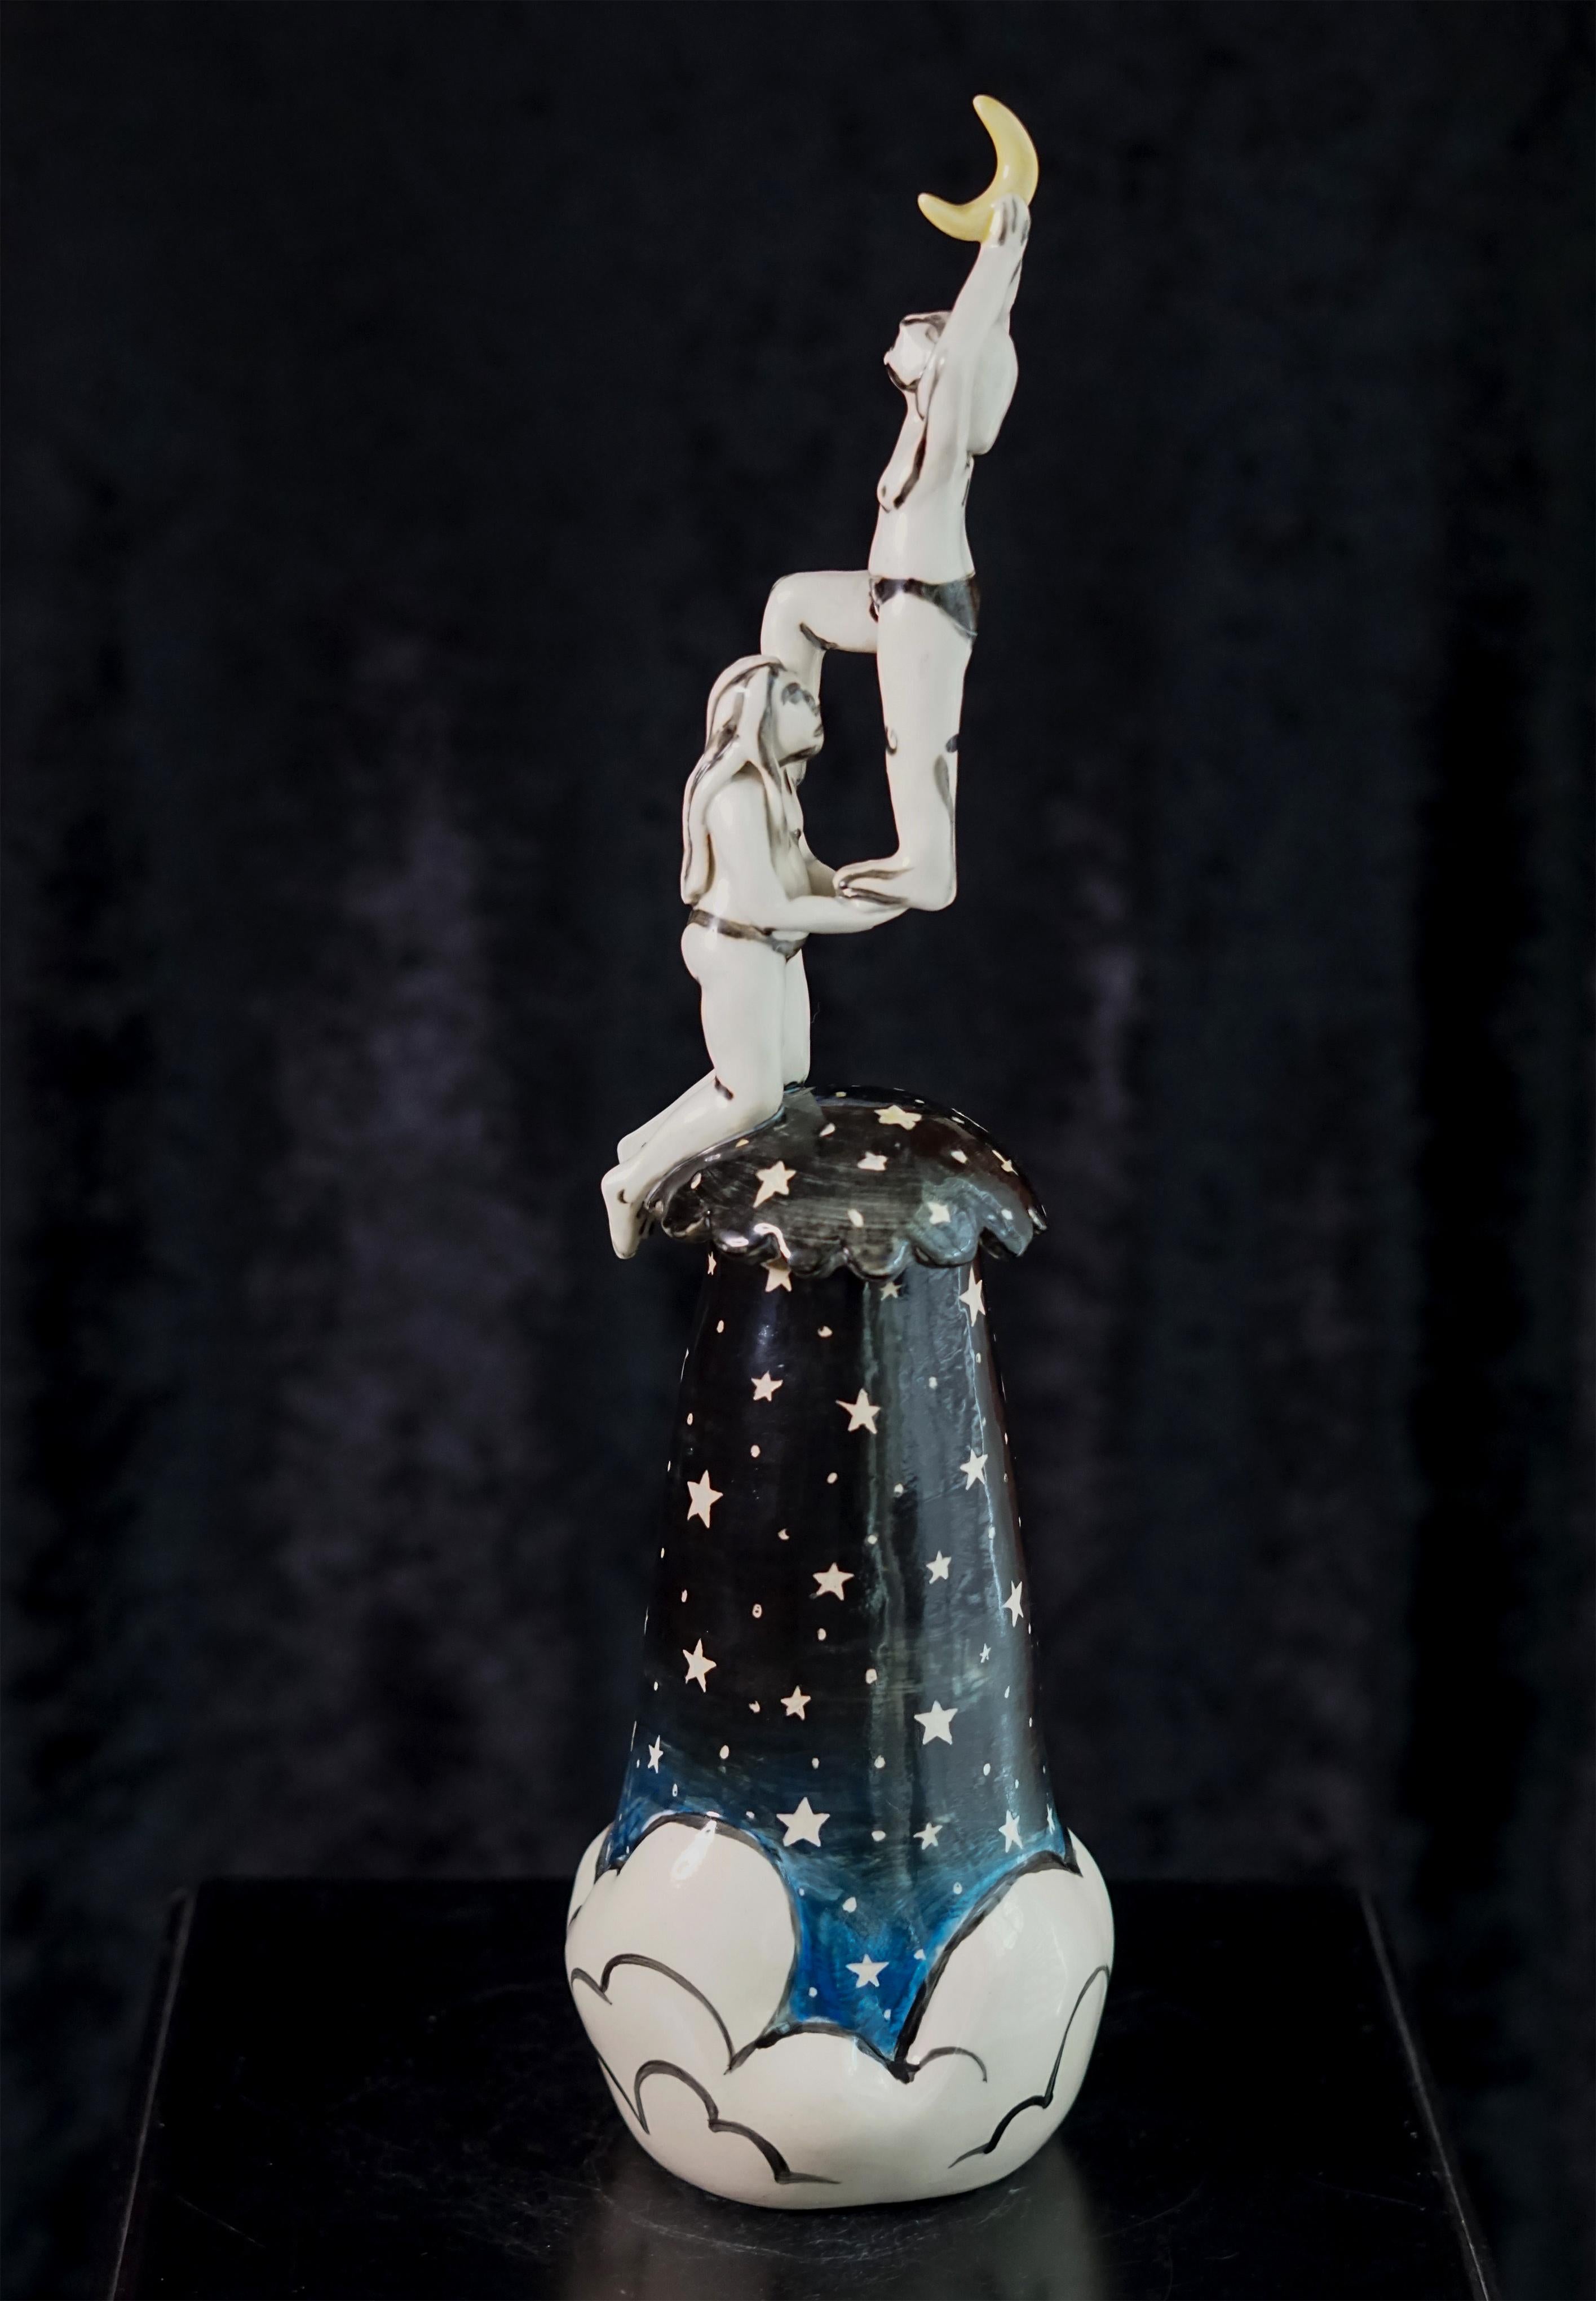 Alex Hodge Nude Sculpture - The Night We Hung the Moon,  Handbuilt porcelain sculpture